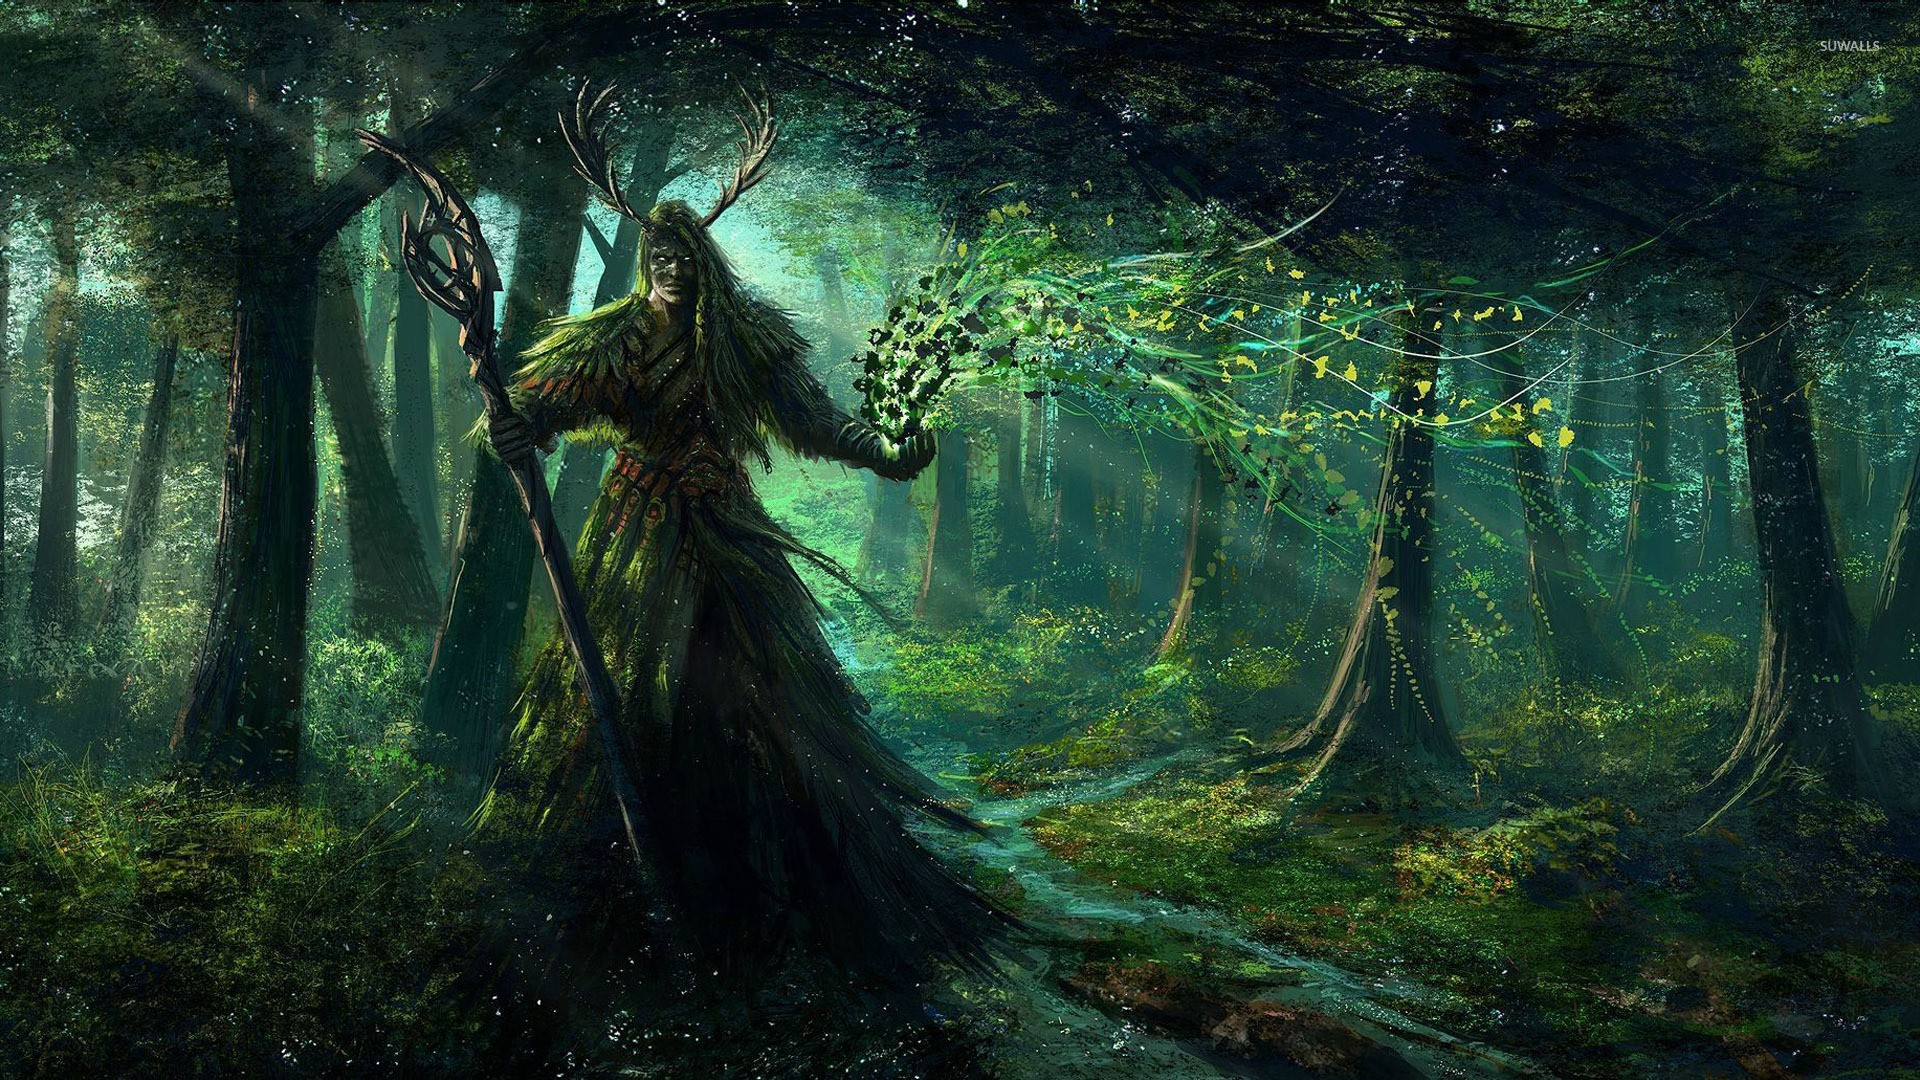 General 1920x1080 fantasy art digital art artwork trees forest plants dark creature water moon rays druids